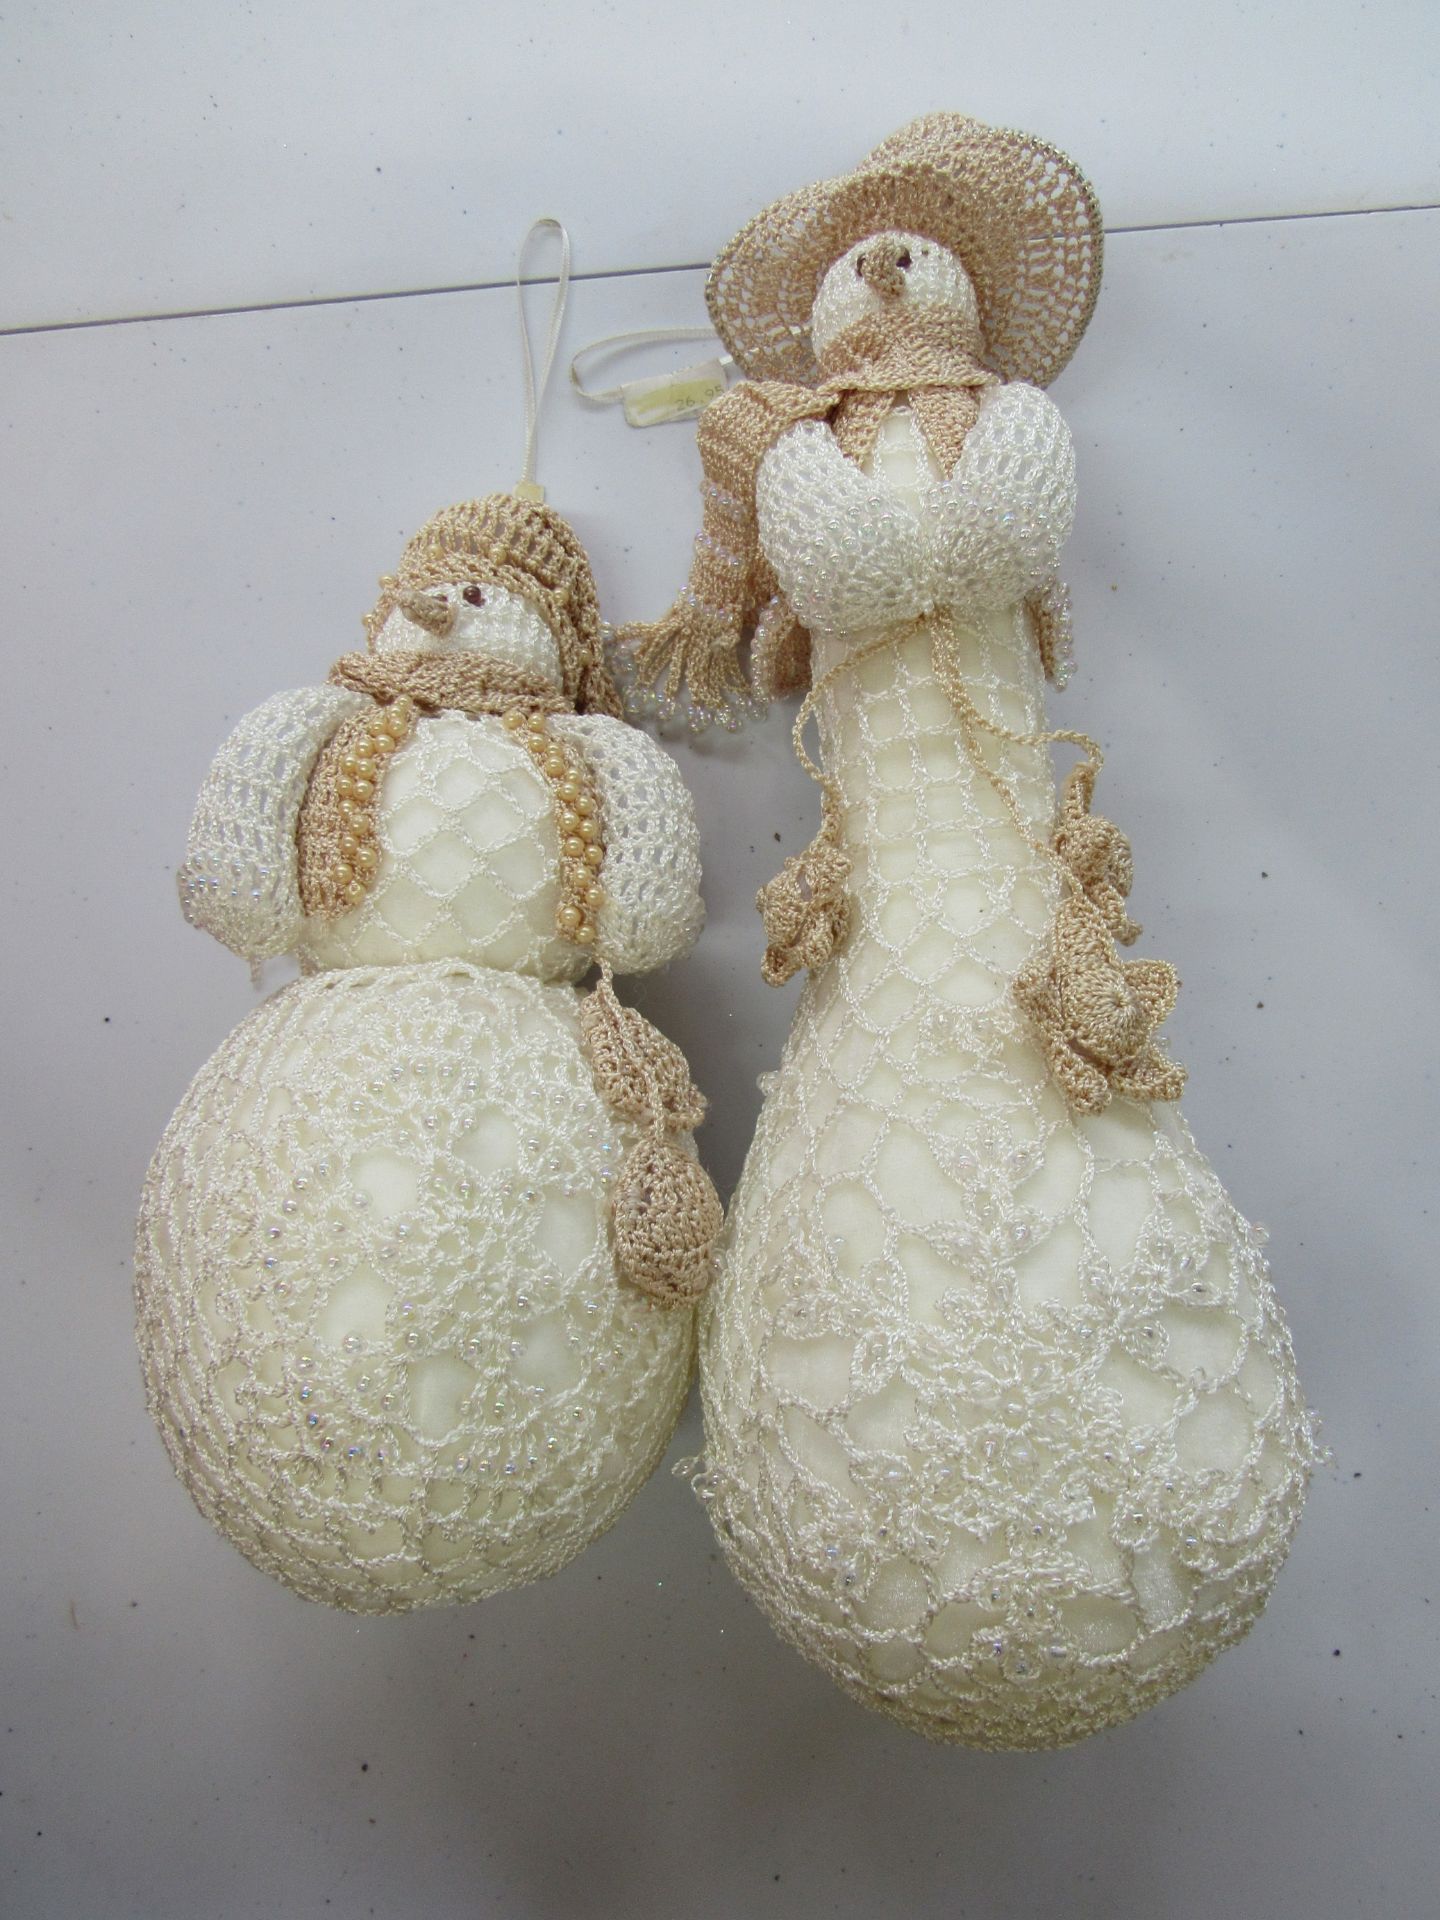 Hand crocheted snowmen